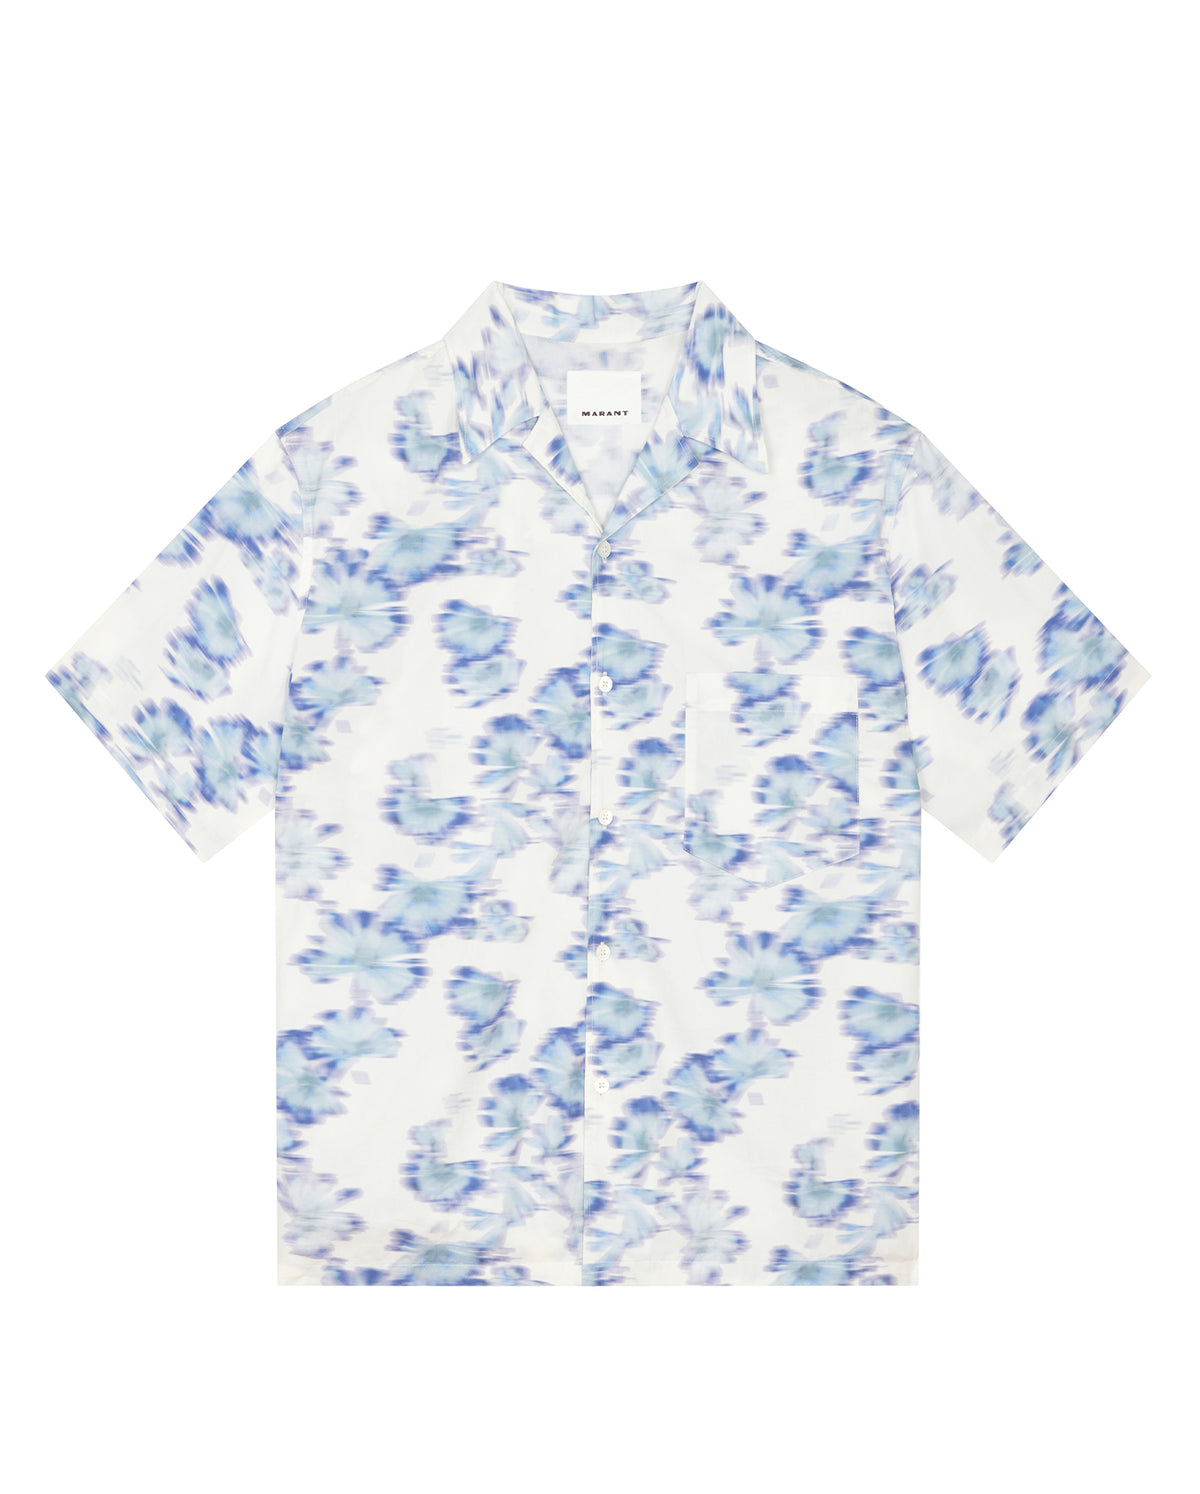 Lazlo Printed Short Sleeve Shirt - Light Blue